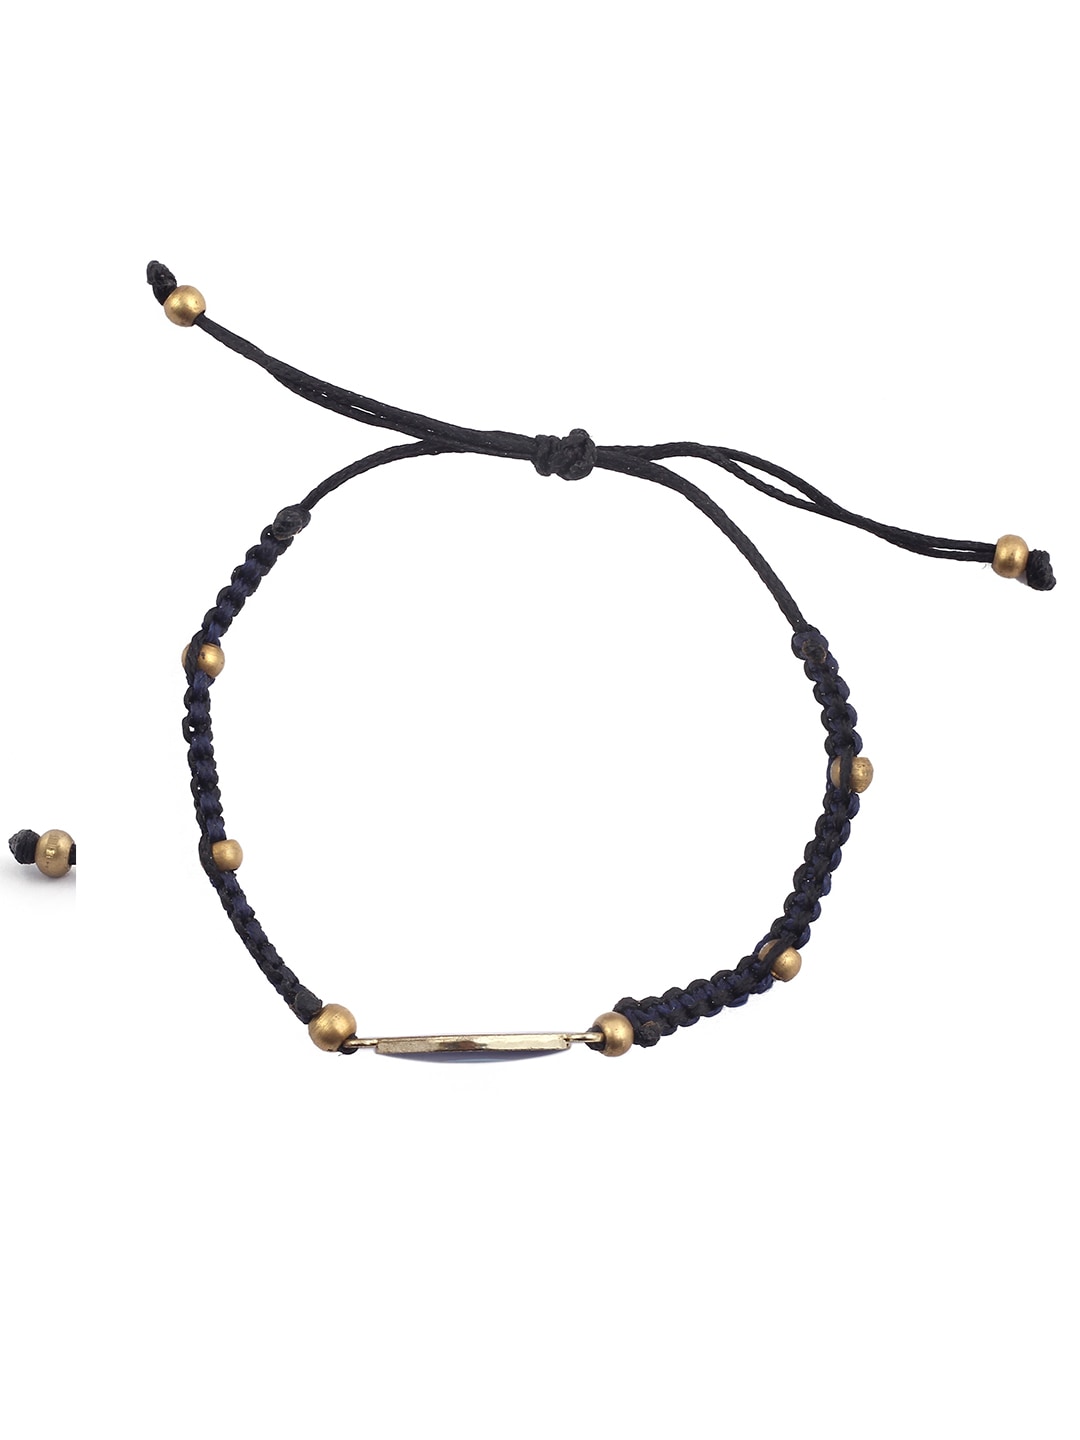 EL REGALO Men Blue & Gold-Toned Charm Bracelet - for Men
Style ID: 17157494